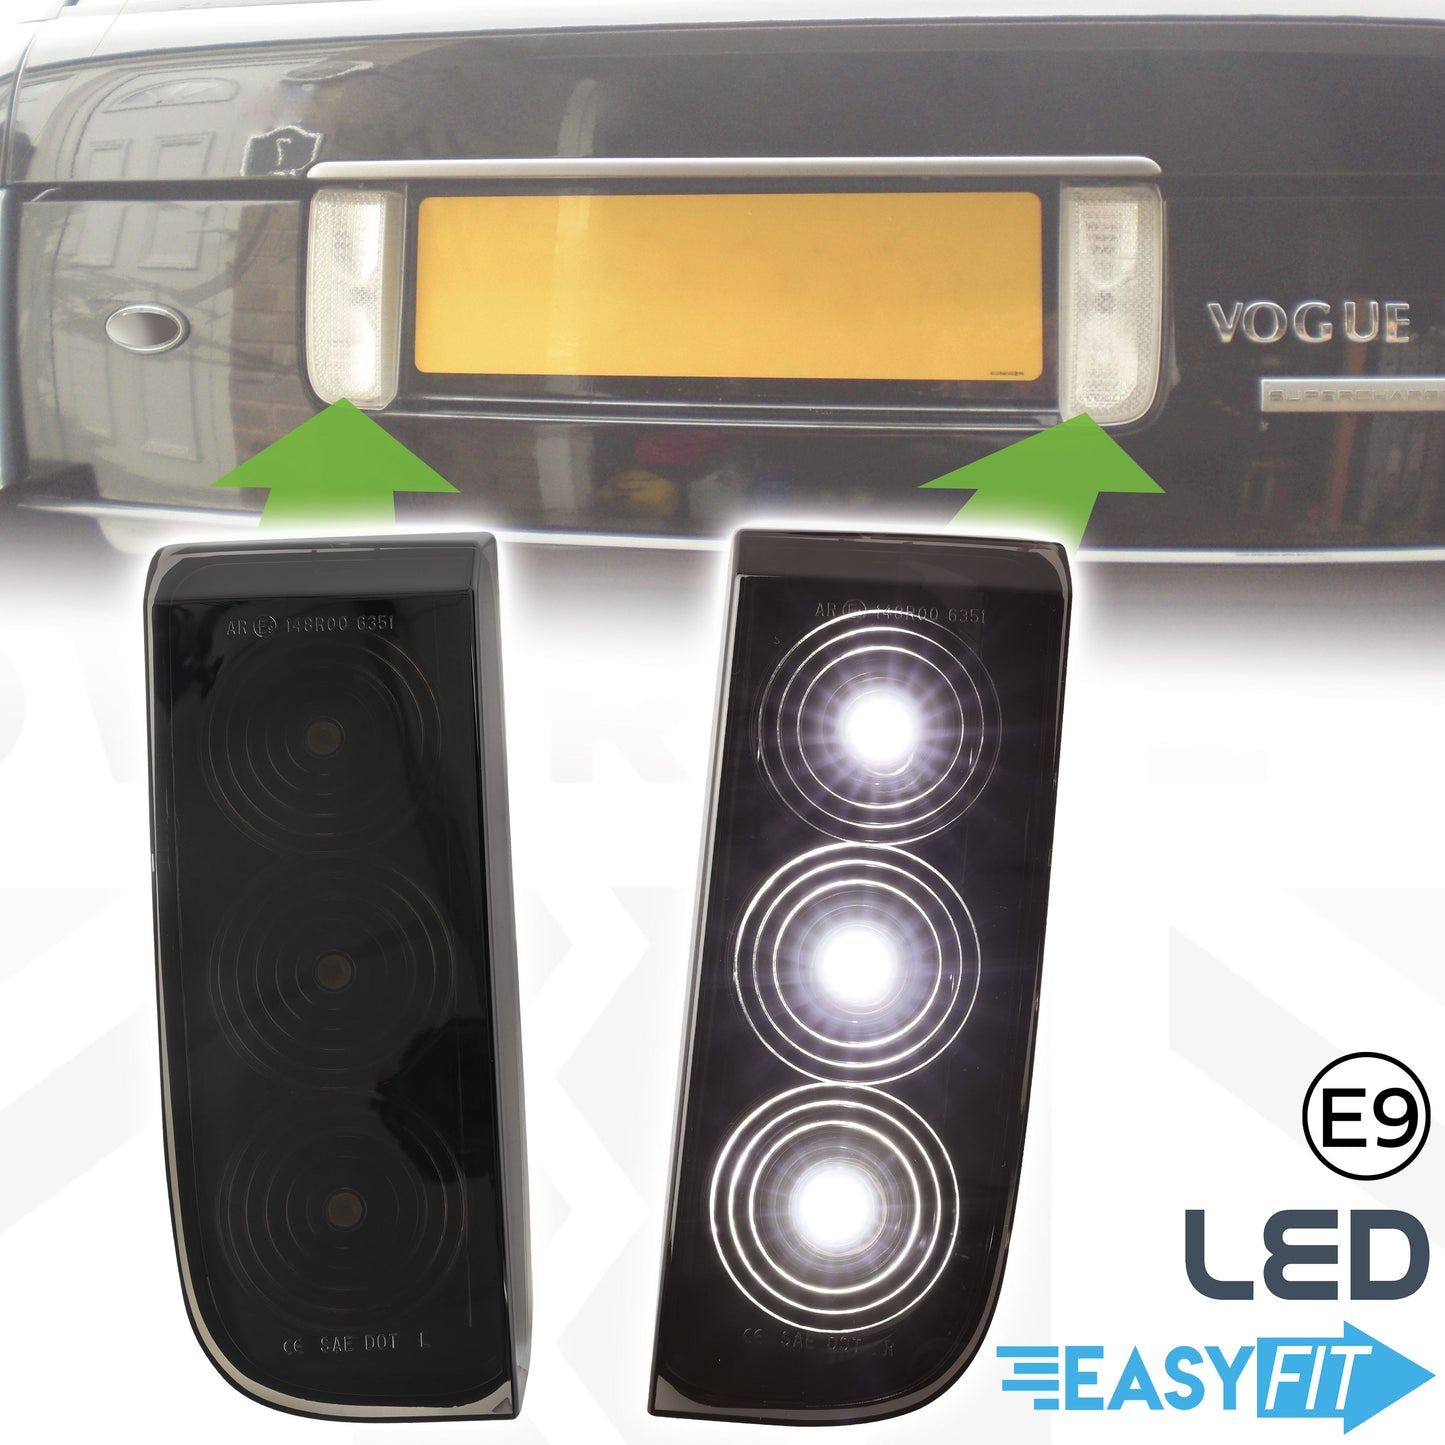 LED Reverse Light Assemblies (Pair) for Range Rover L322 - Smoked Lens